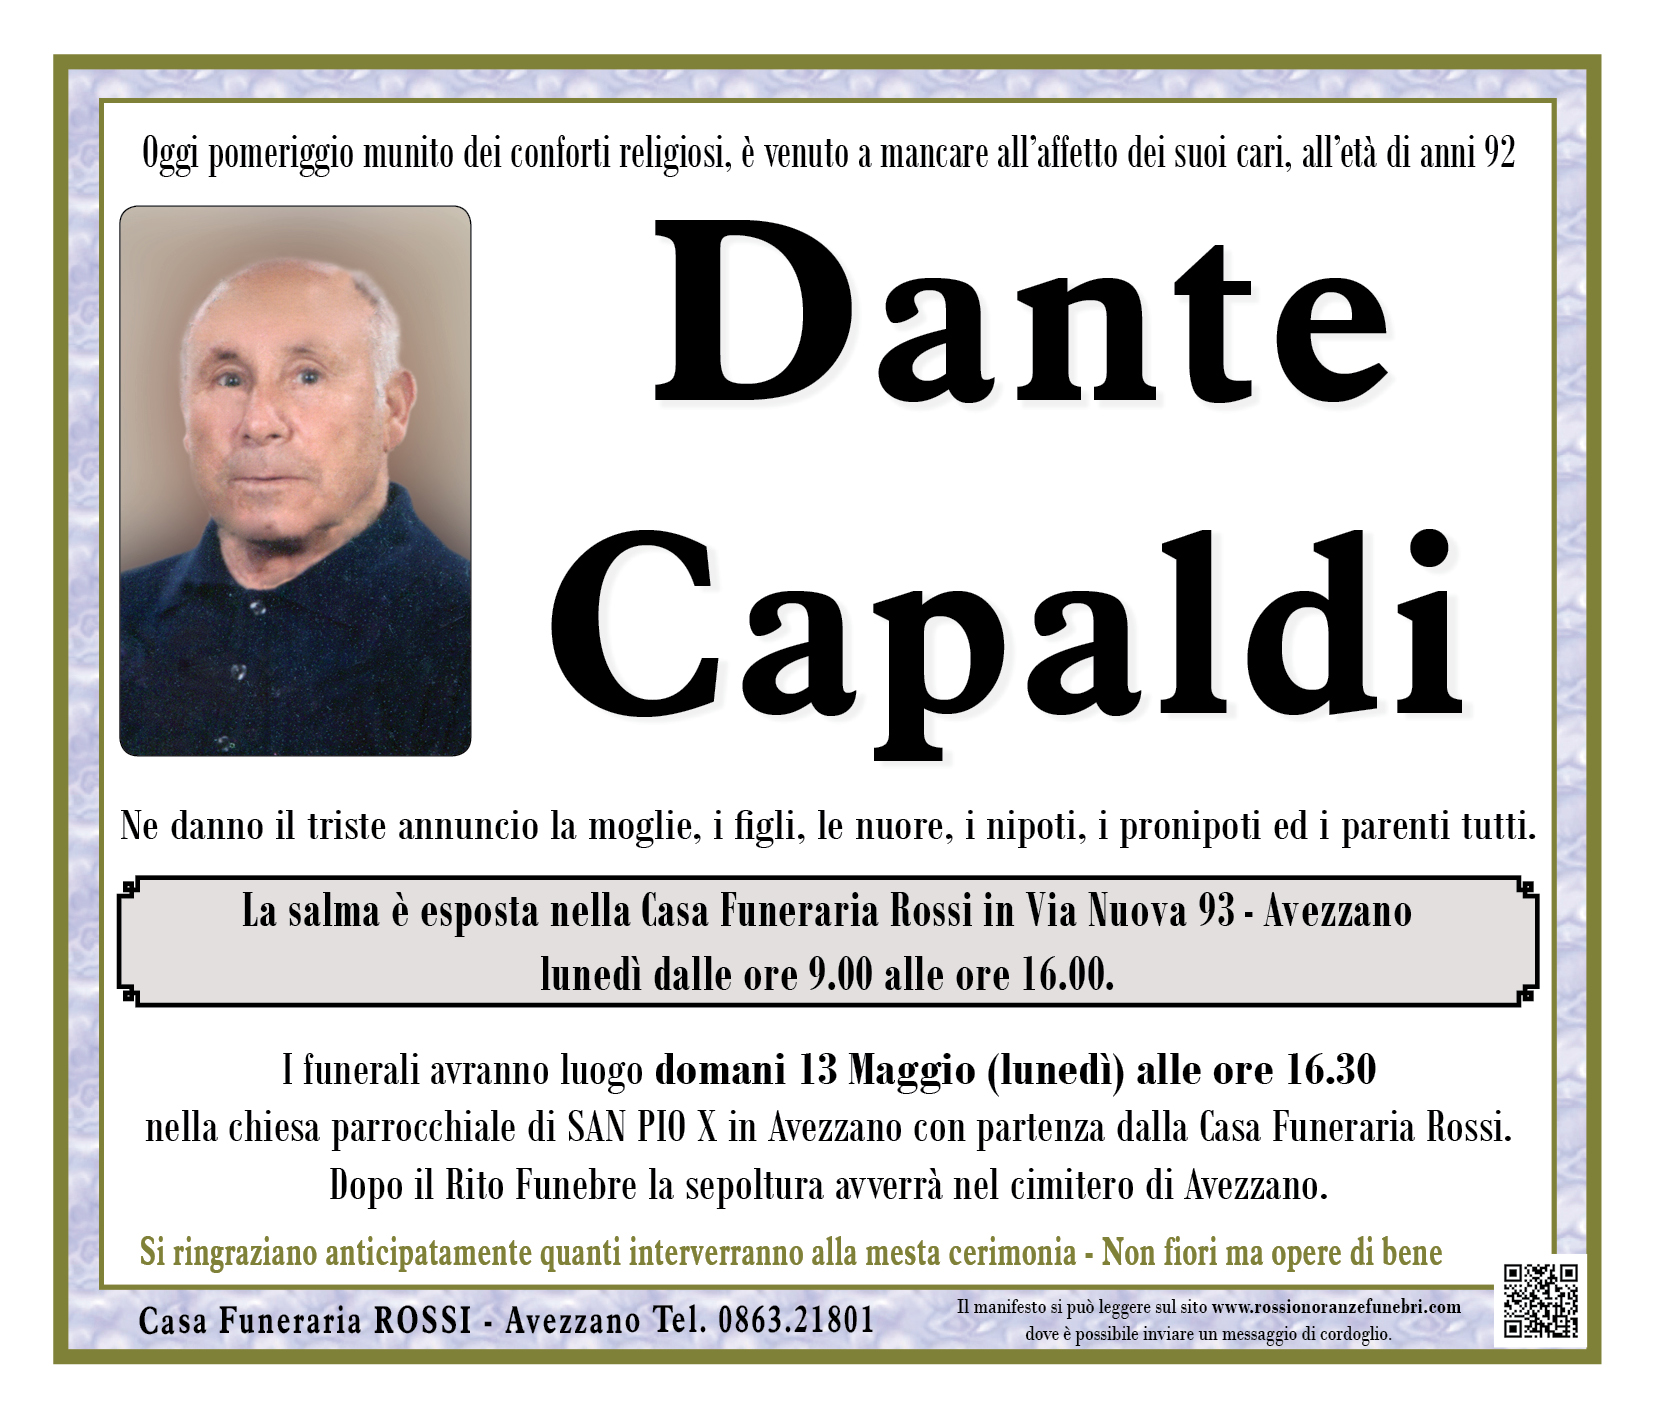 Dante Capaldi